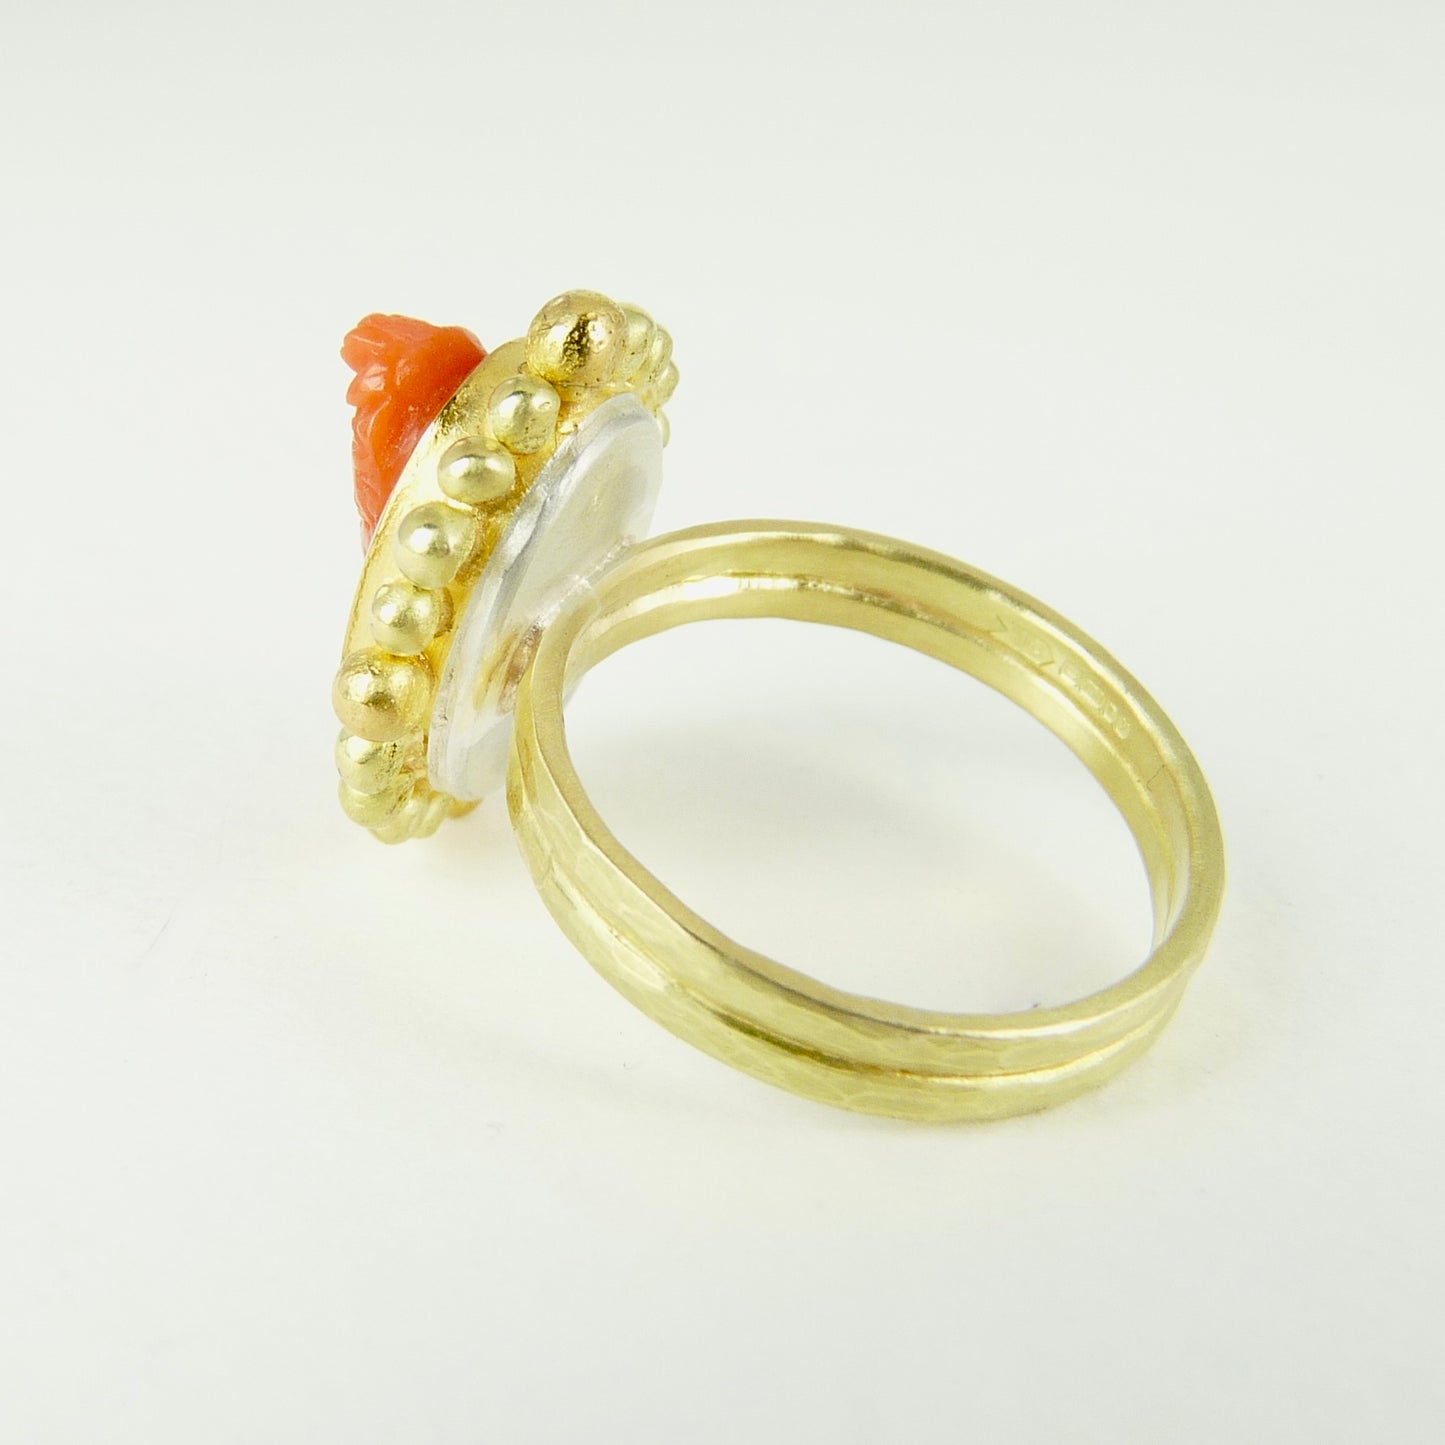 Antique Coral Cameo Courtesan Ring